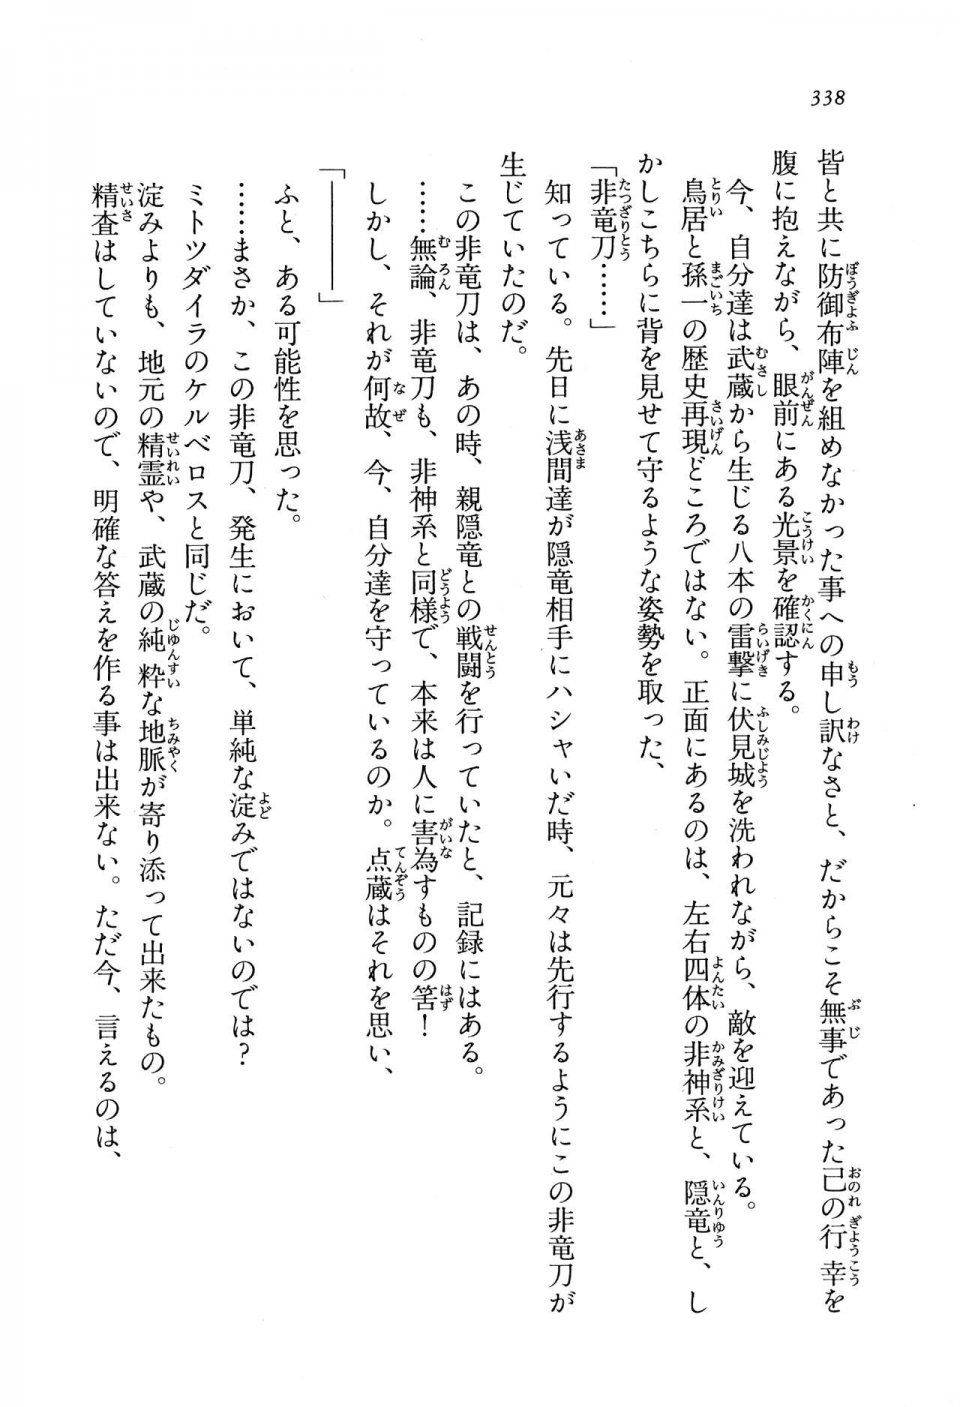 Kyoukai Senjou no Horizon BD Special Mininovel Vol 8(4B) - Photo #342